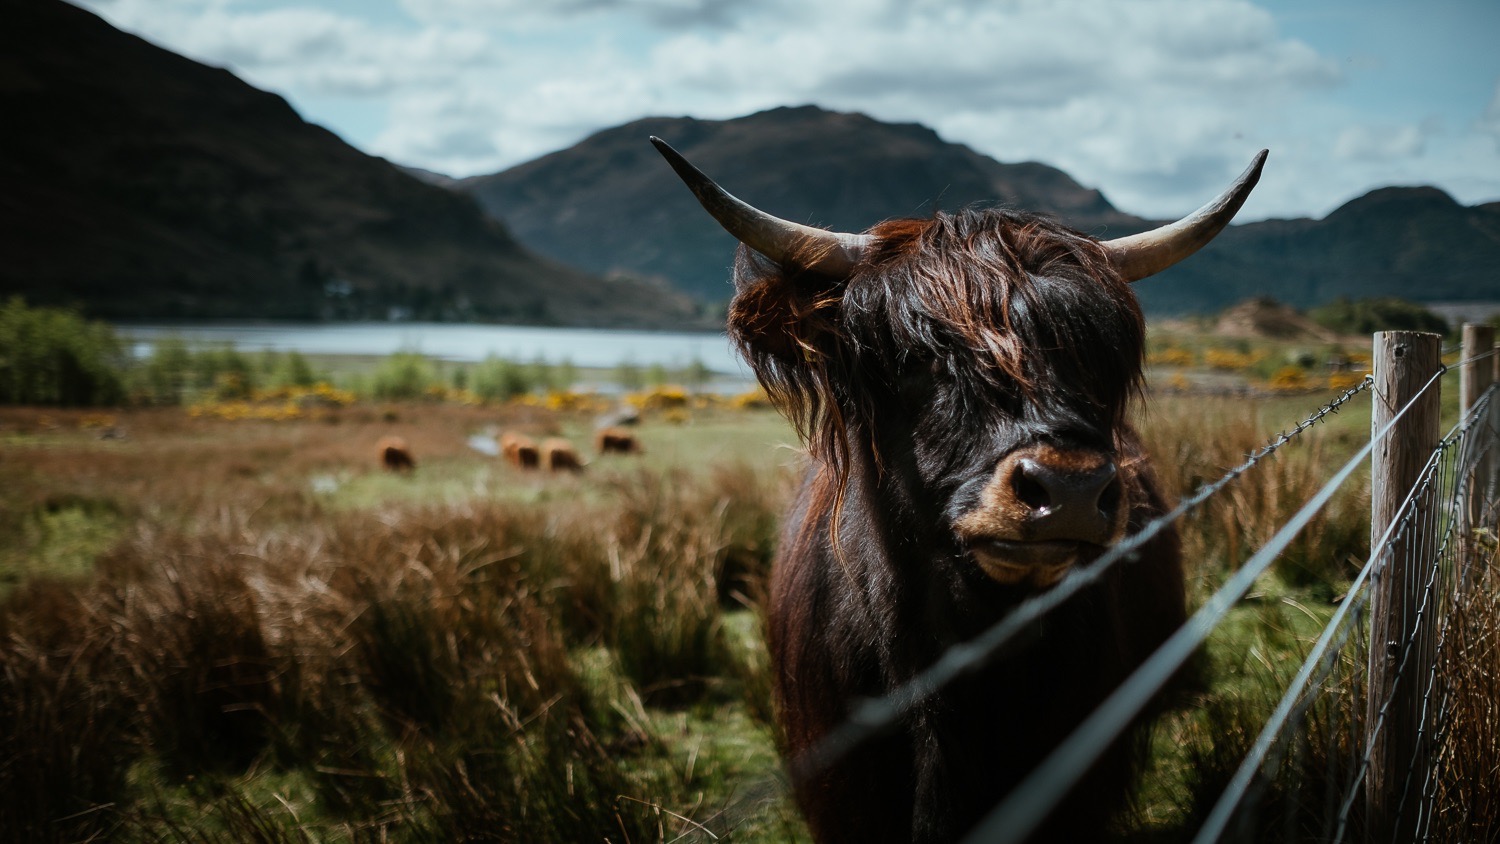 0041-scotland-tamron-le monde de la photo-paysage-20190509132614-compress.jpg